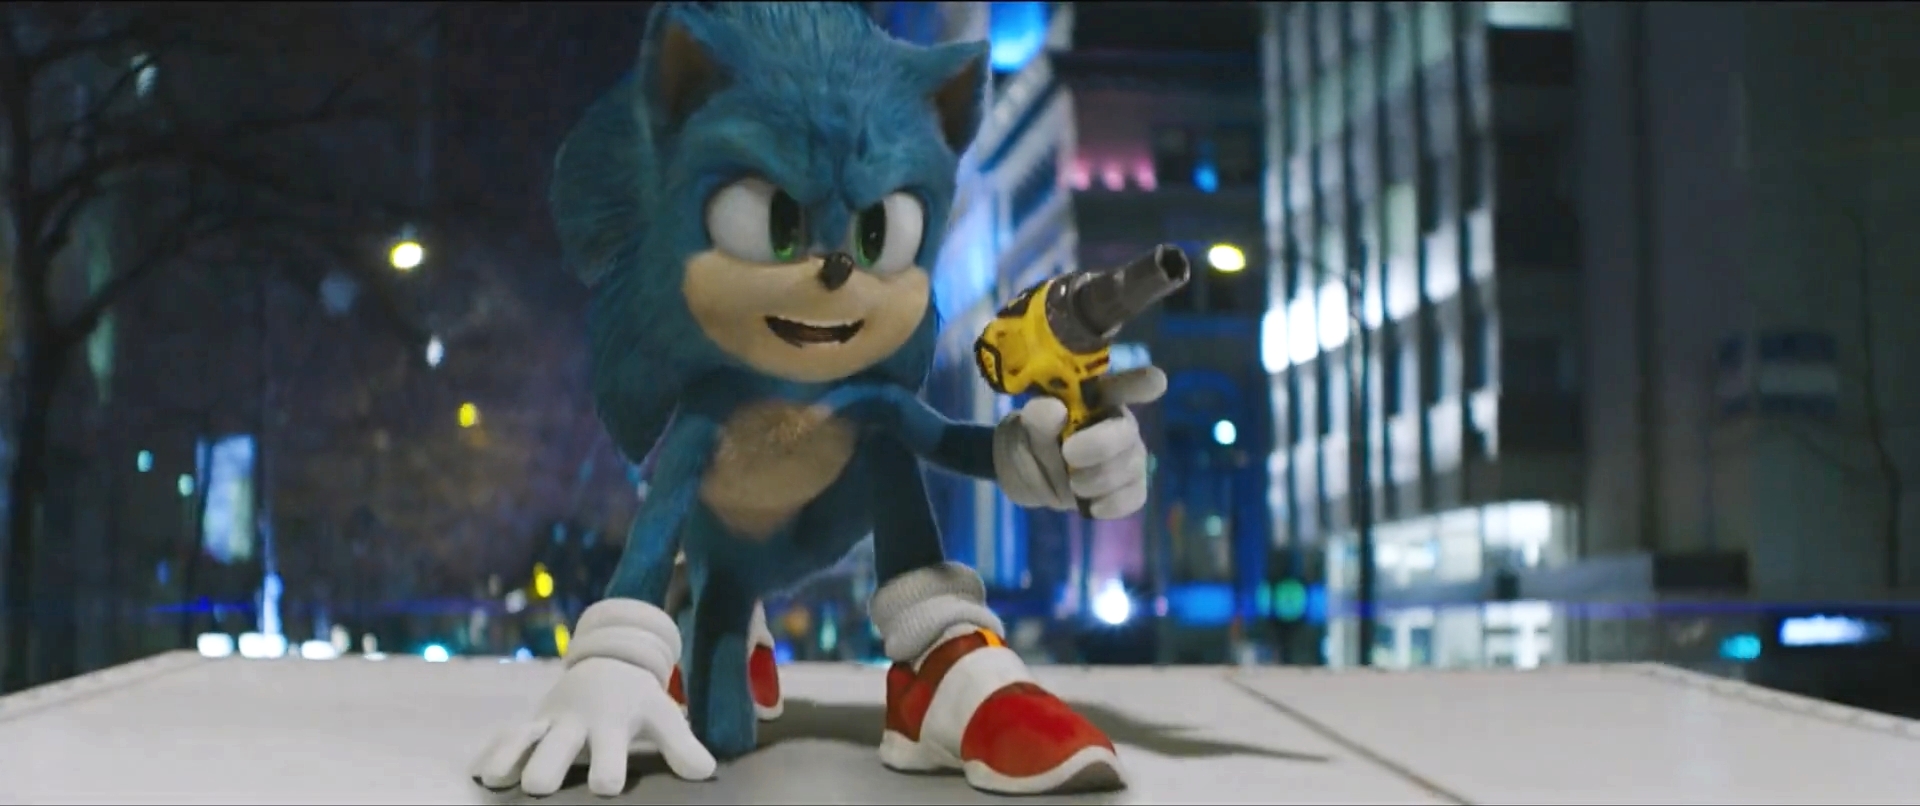 Sonic the Hedgehog (Movie) (5) - PNG by Captain-Kingsman16 on DeviantArt